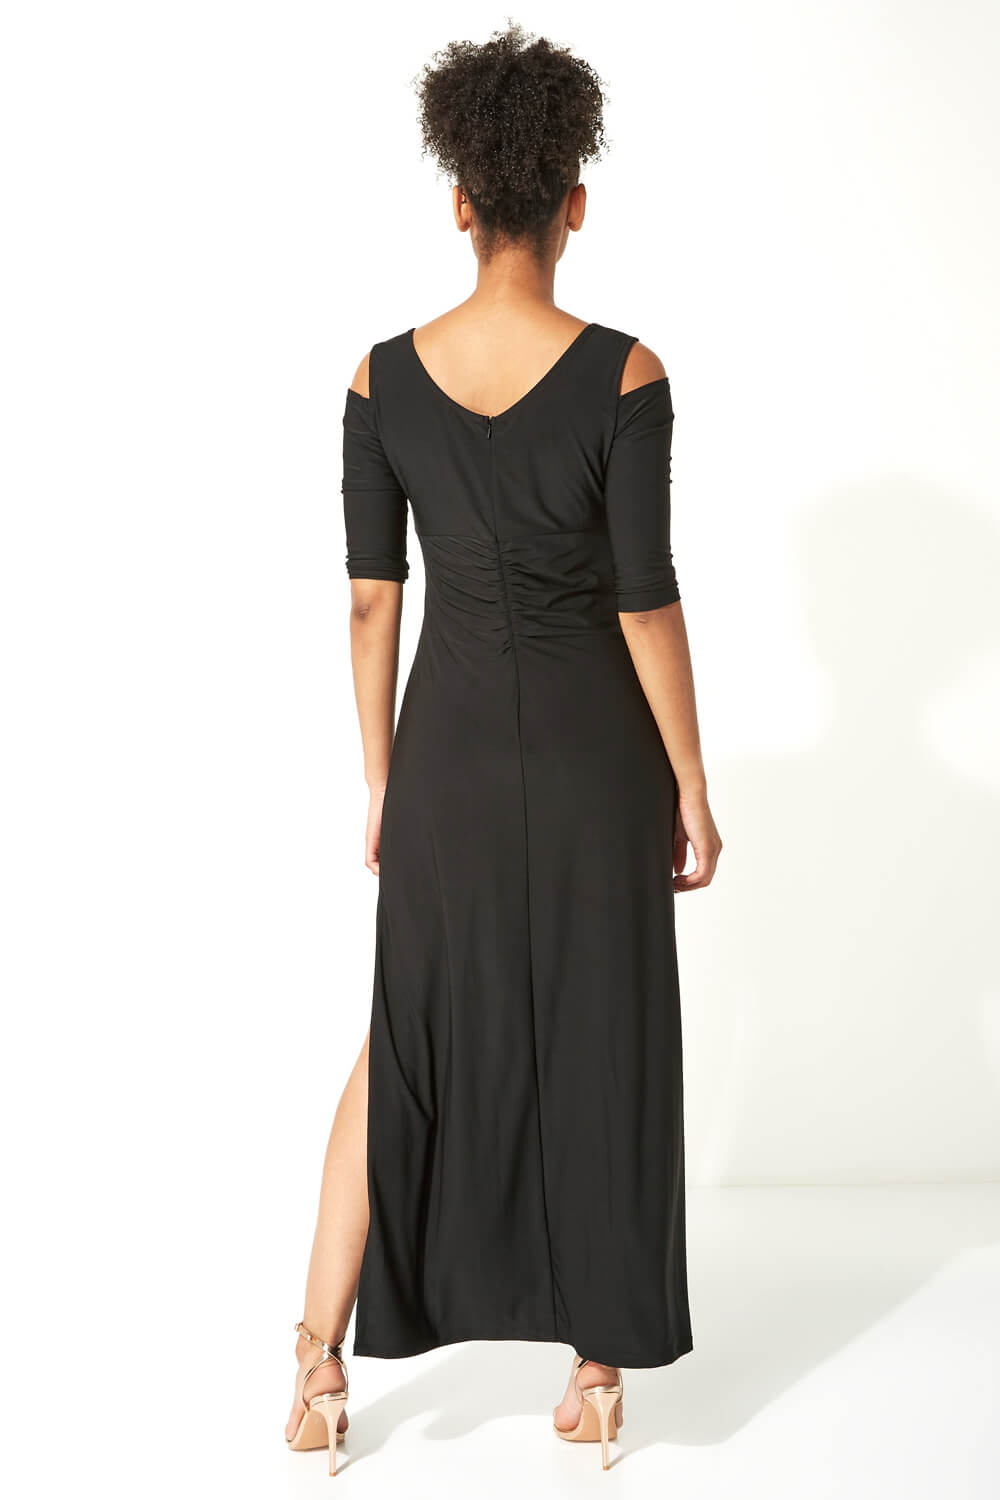 Black Cold Shoulder Diamante Maxi Dress, Image 2 of 4